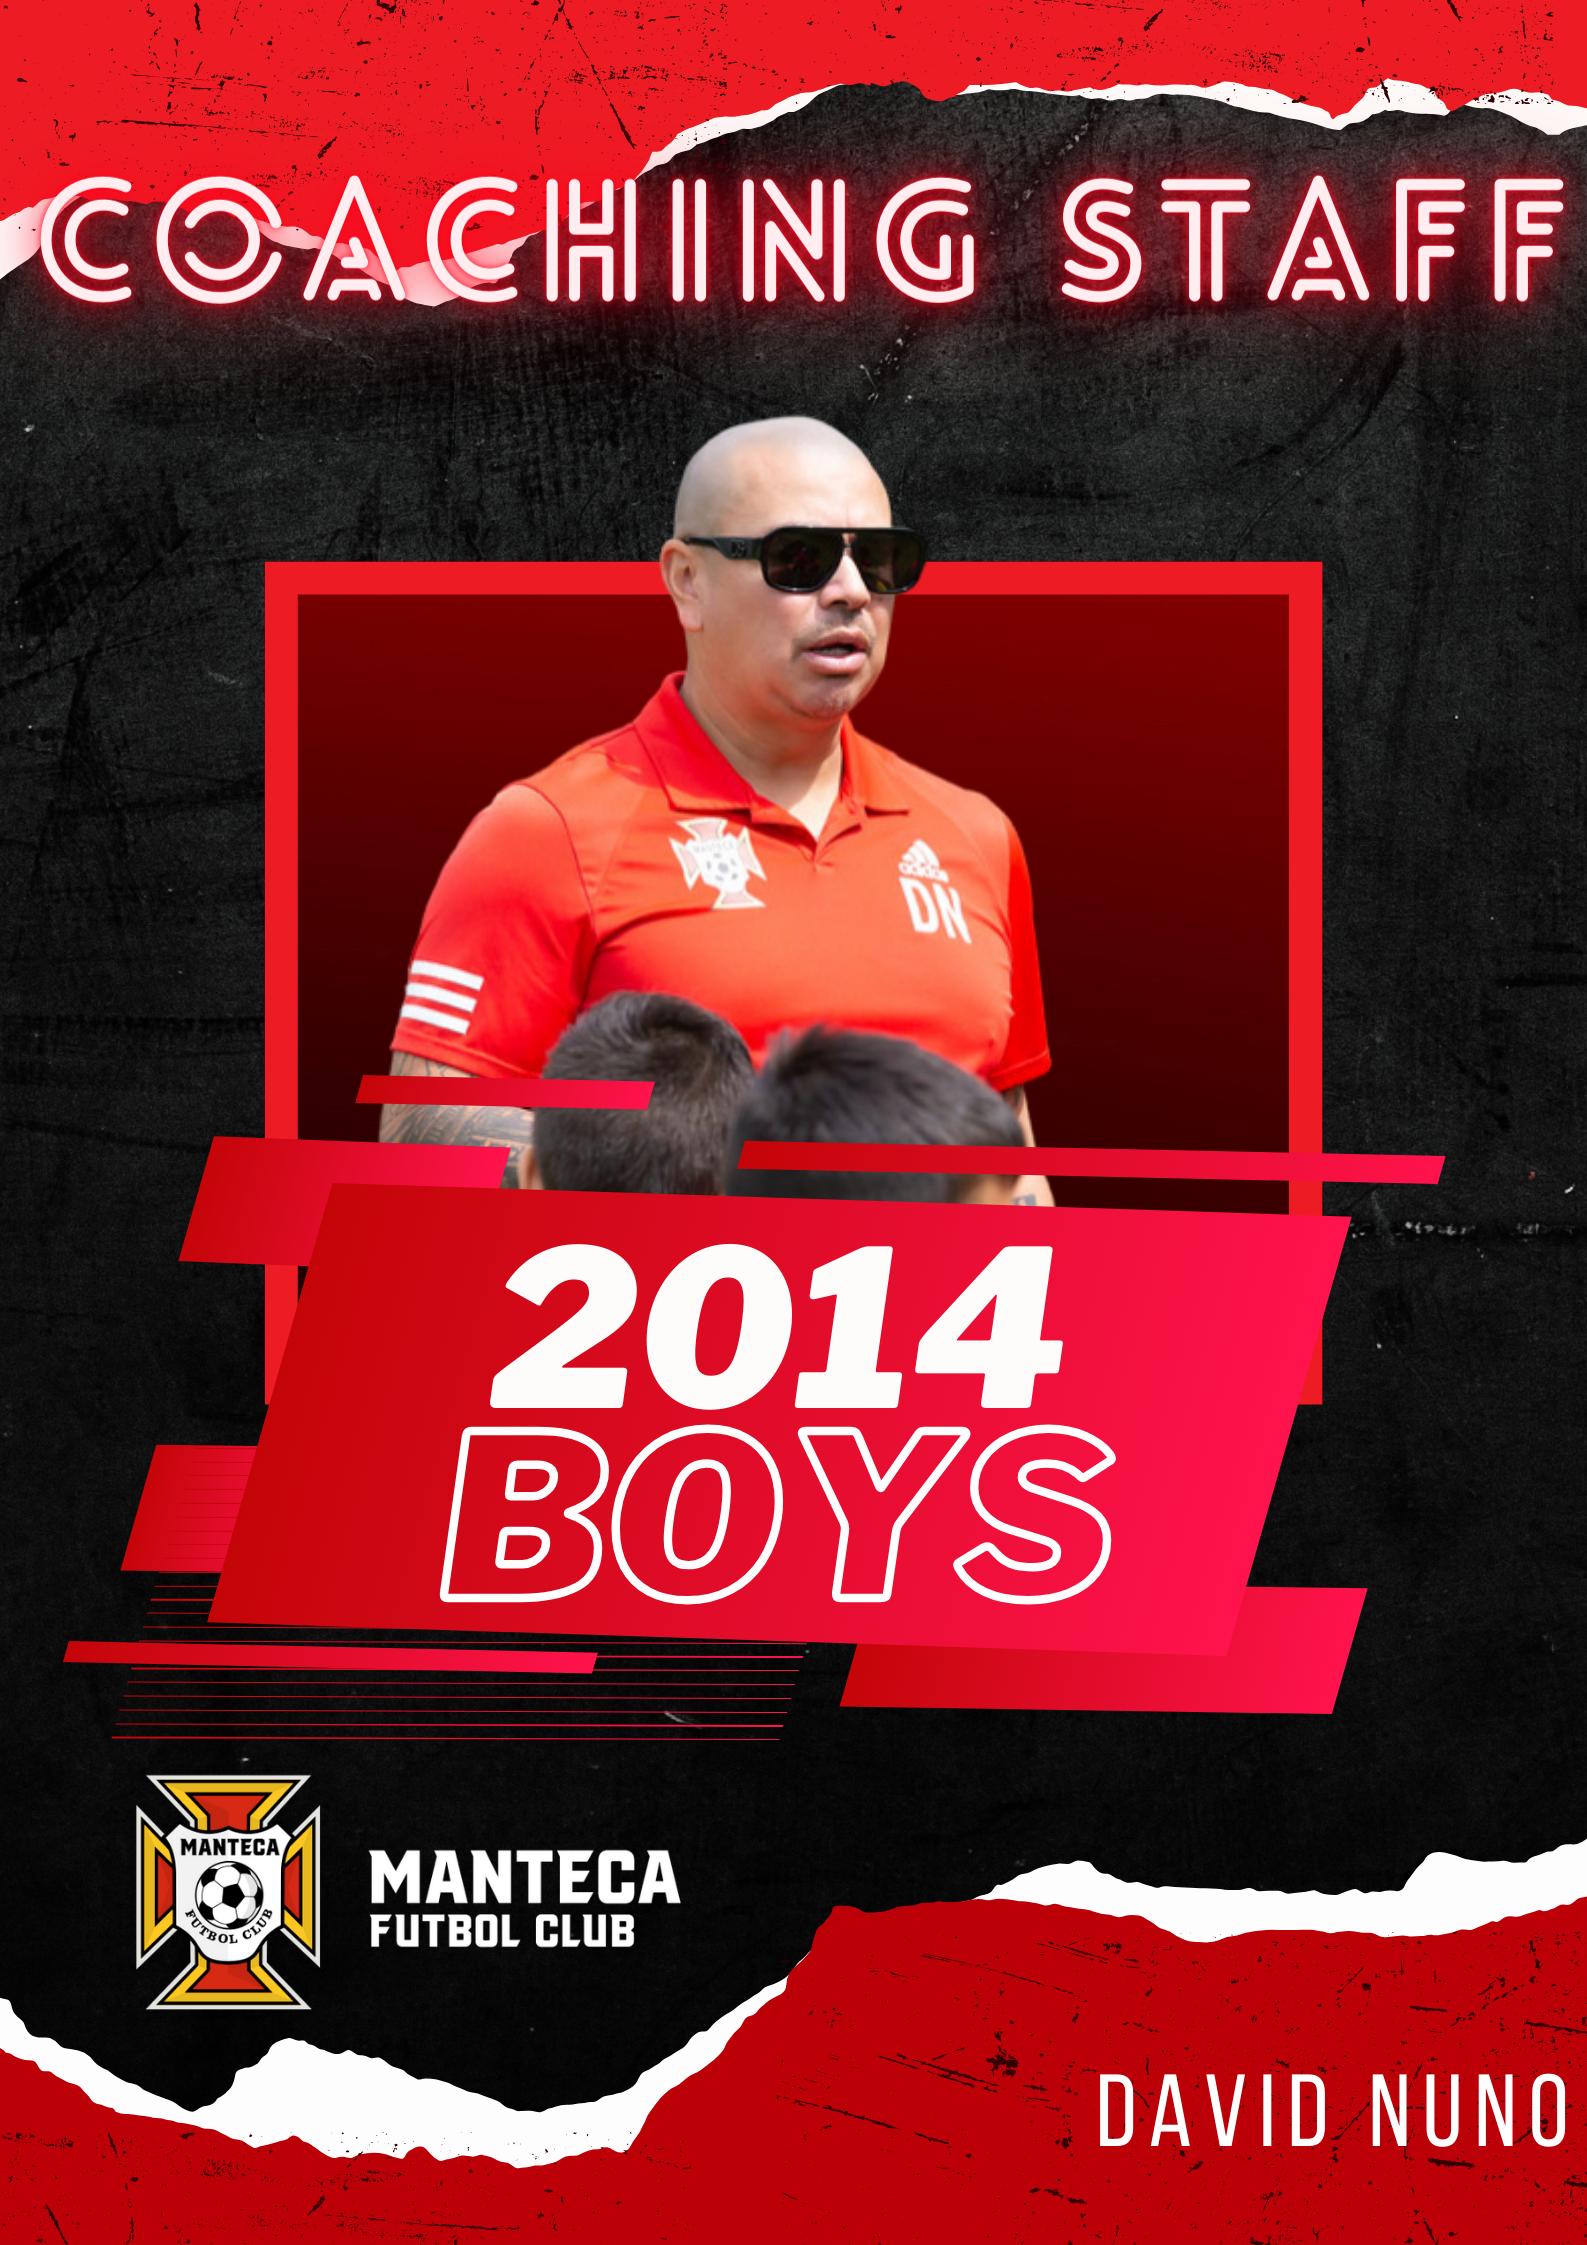 Manteca Futbol Club 14 Boys Red